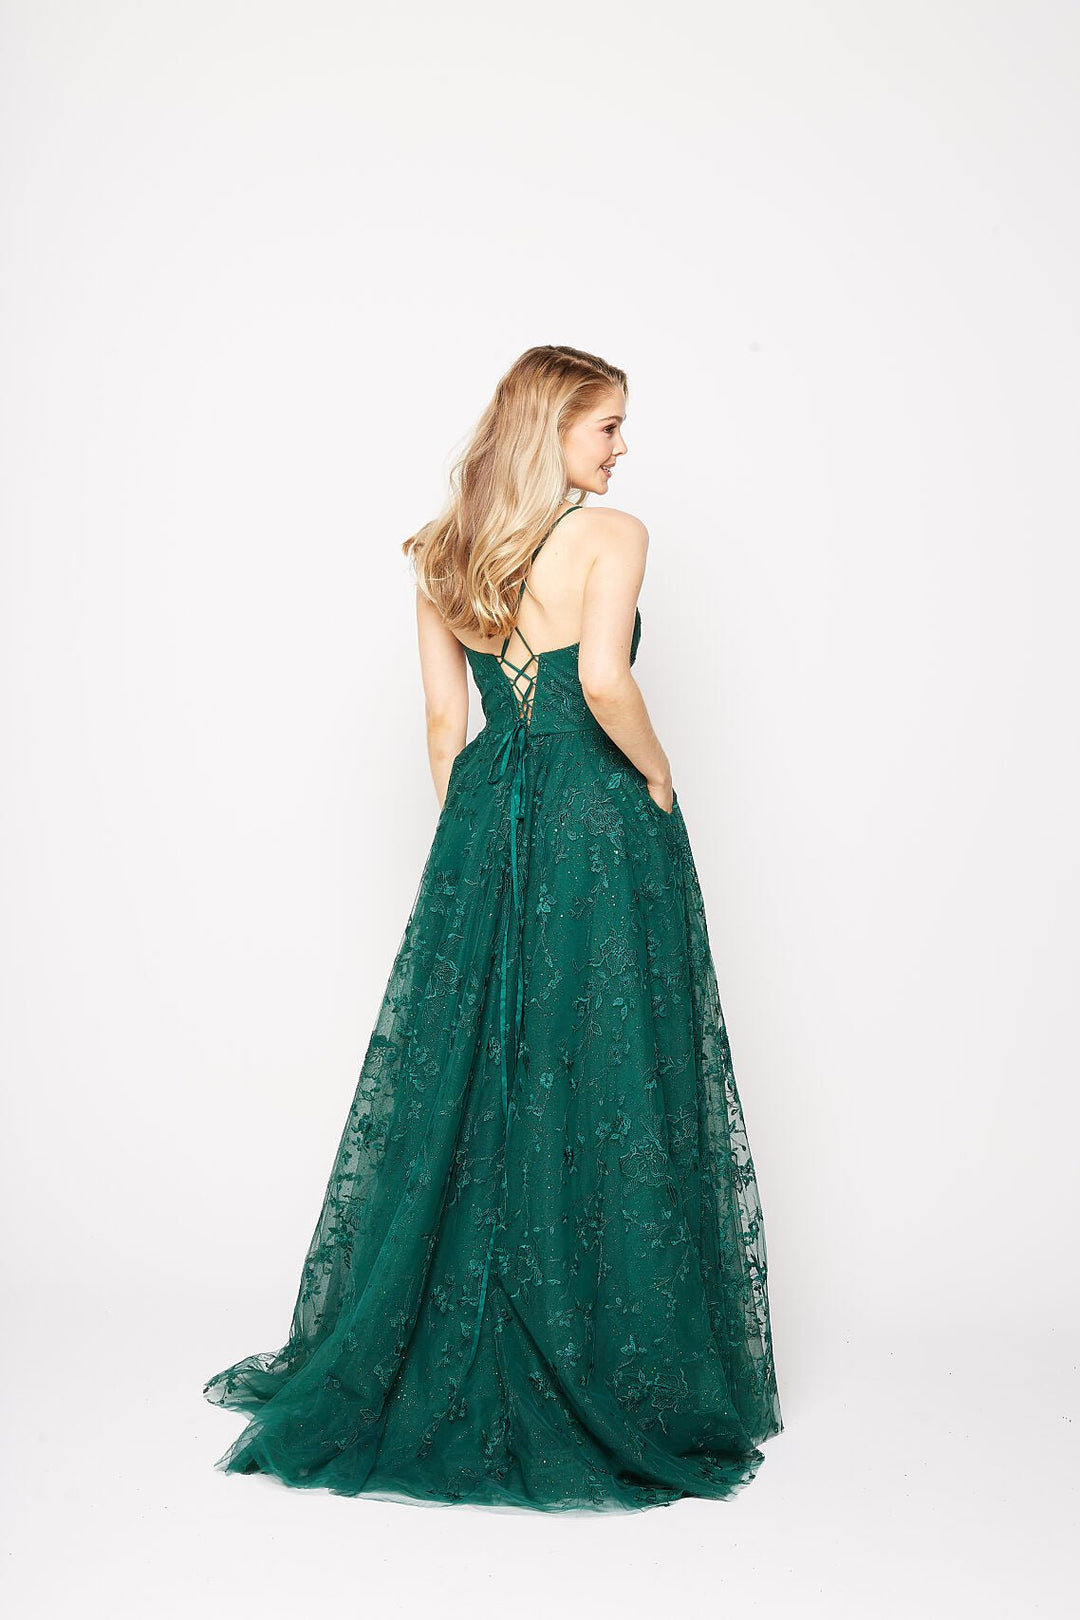 Briony Dress by Tania Olsen PO972 - ElissaJay Boutique